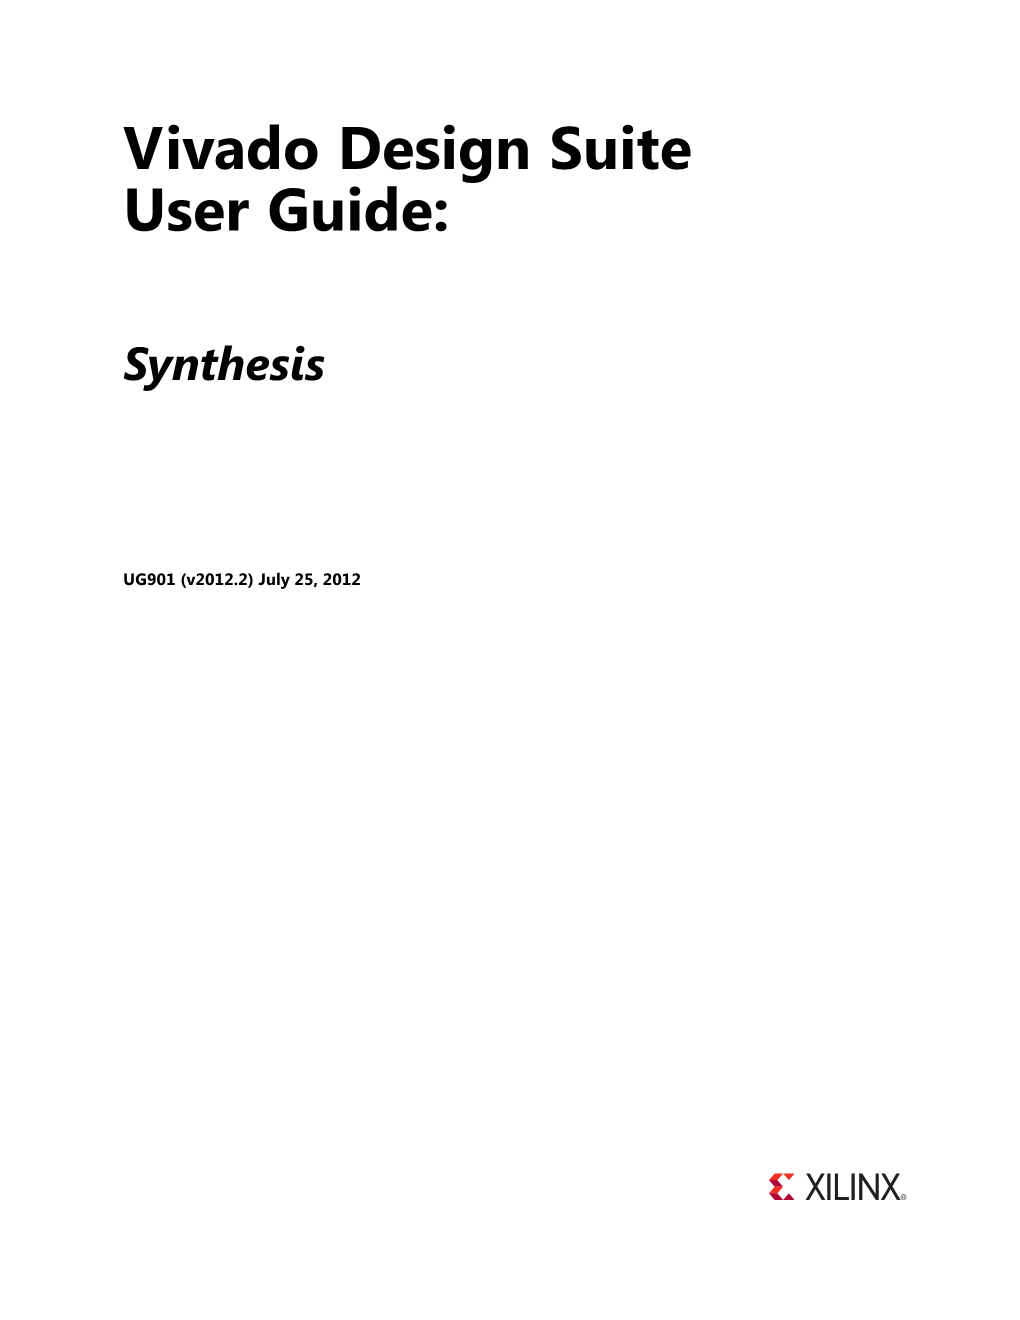 Xilinx Vivado Design Suite User Guide: Synthesis (UG901)